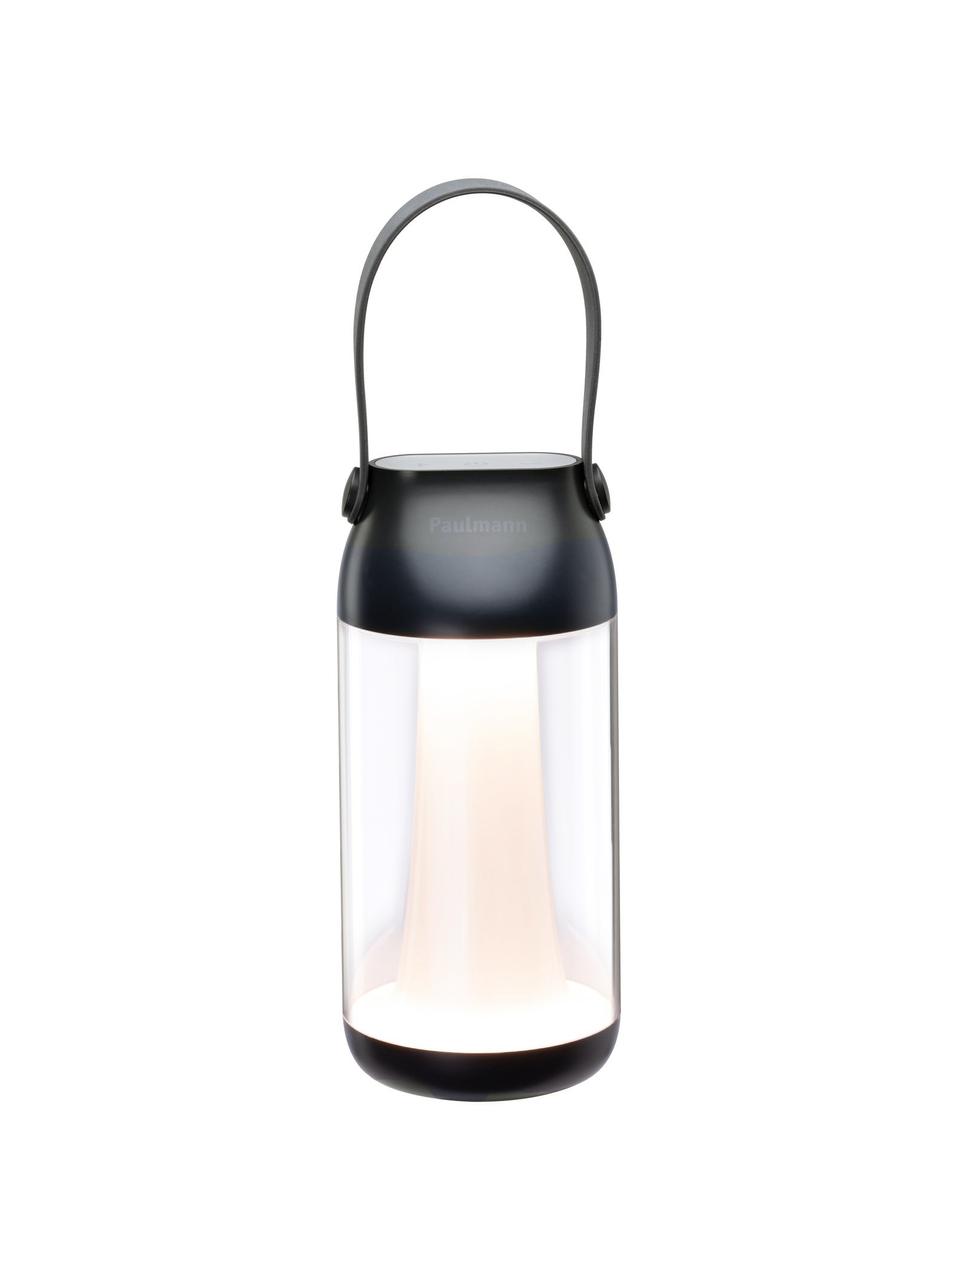 Lámpara de mesa LED regulable para exterior Capulino, portátil, Pantalla: plástico, Asa: plástico, Cable: plástico, Transparente, gris antracita, Ø 8 cm x Al 18 cm